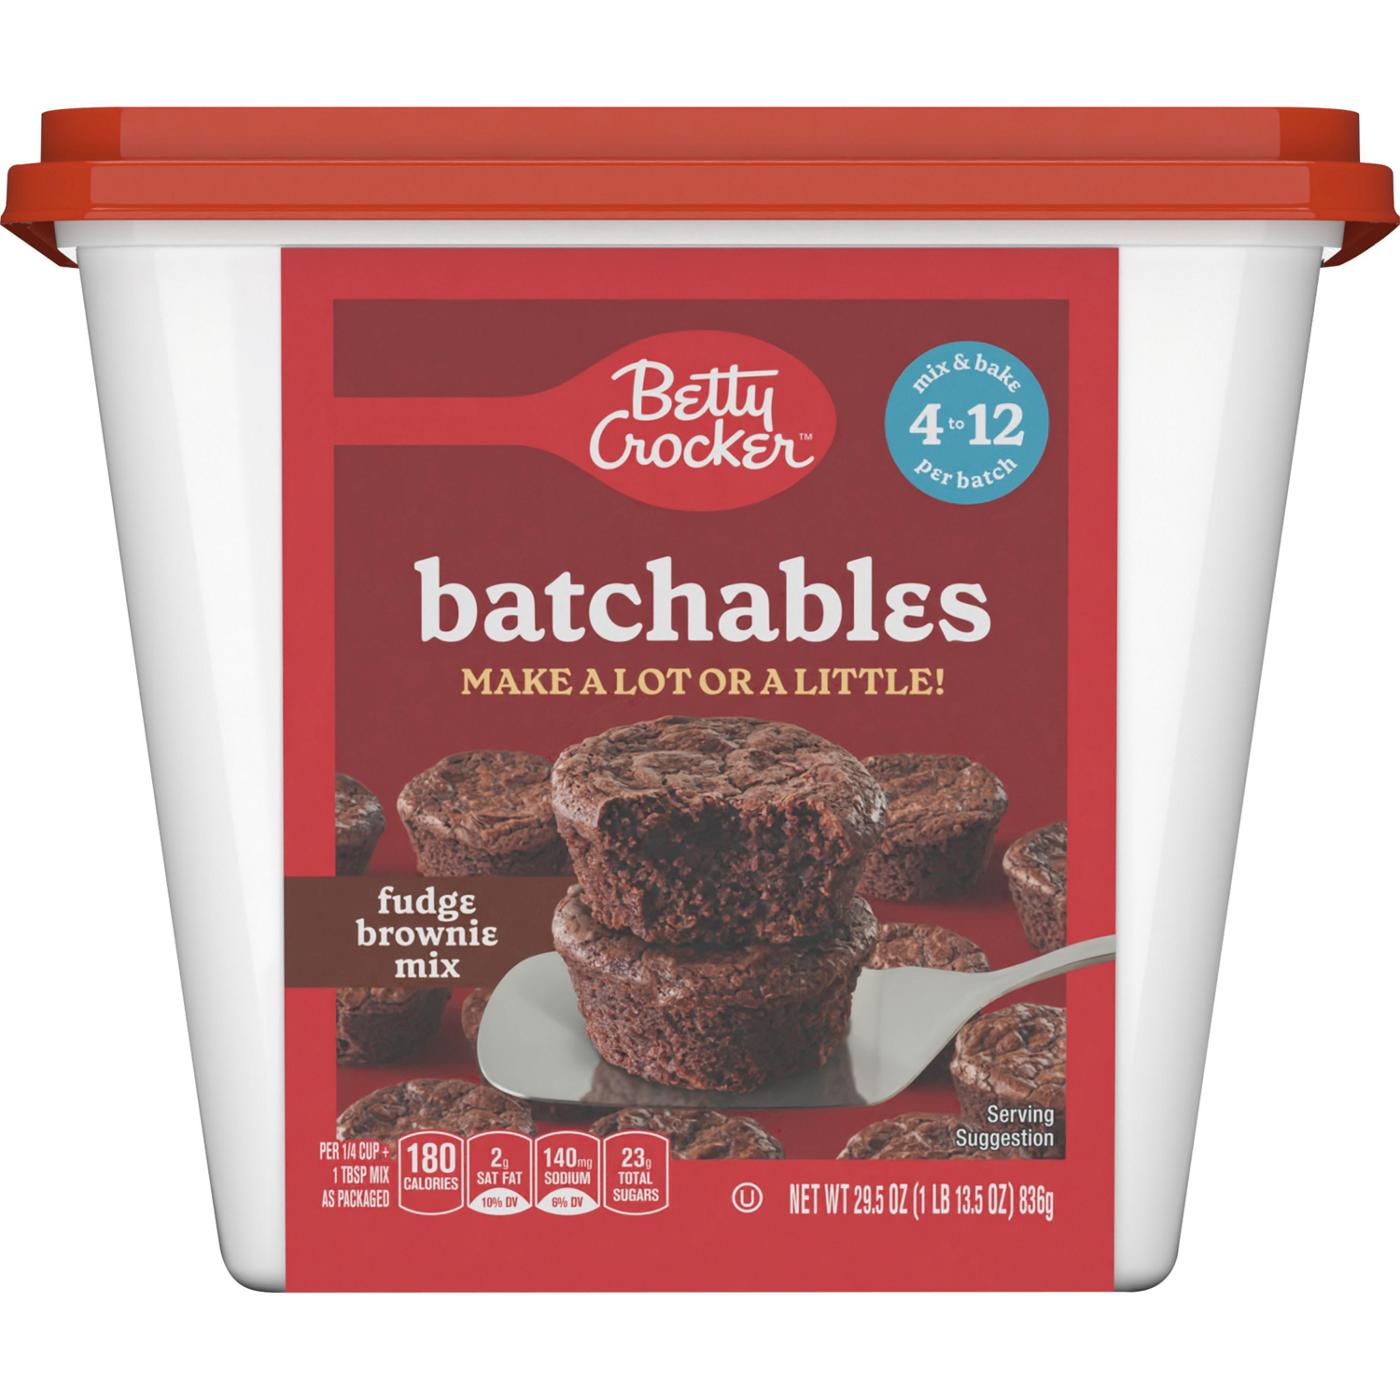 Betty Crocker Batchables Fudge Brownie Mix; image 1 of 4